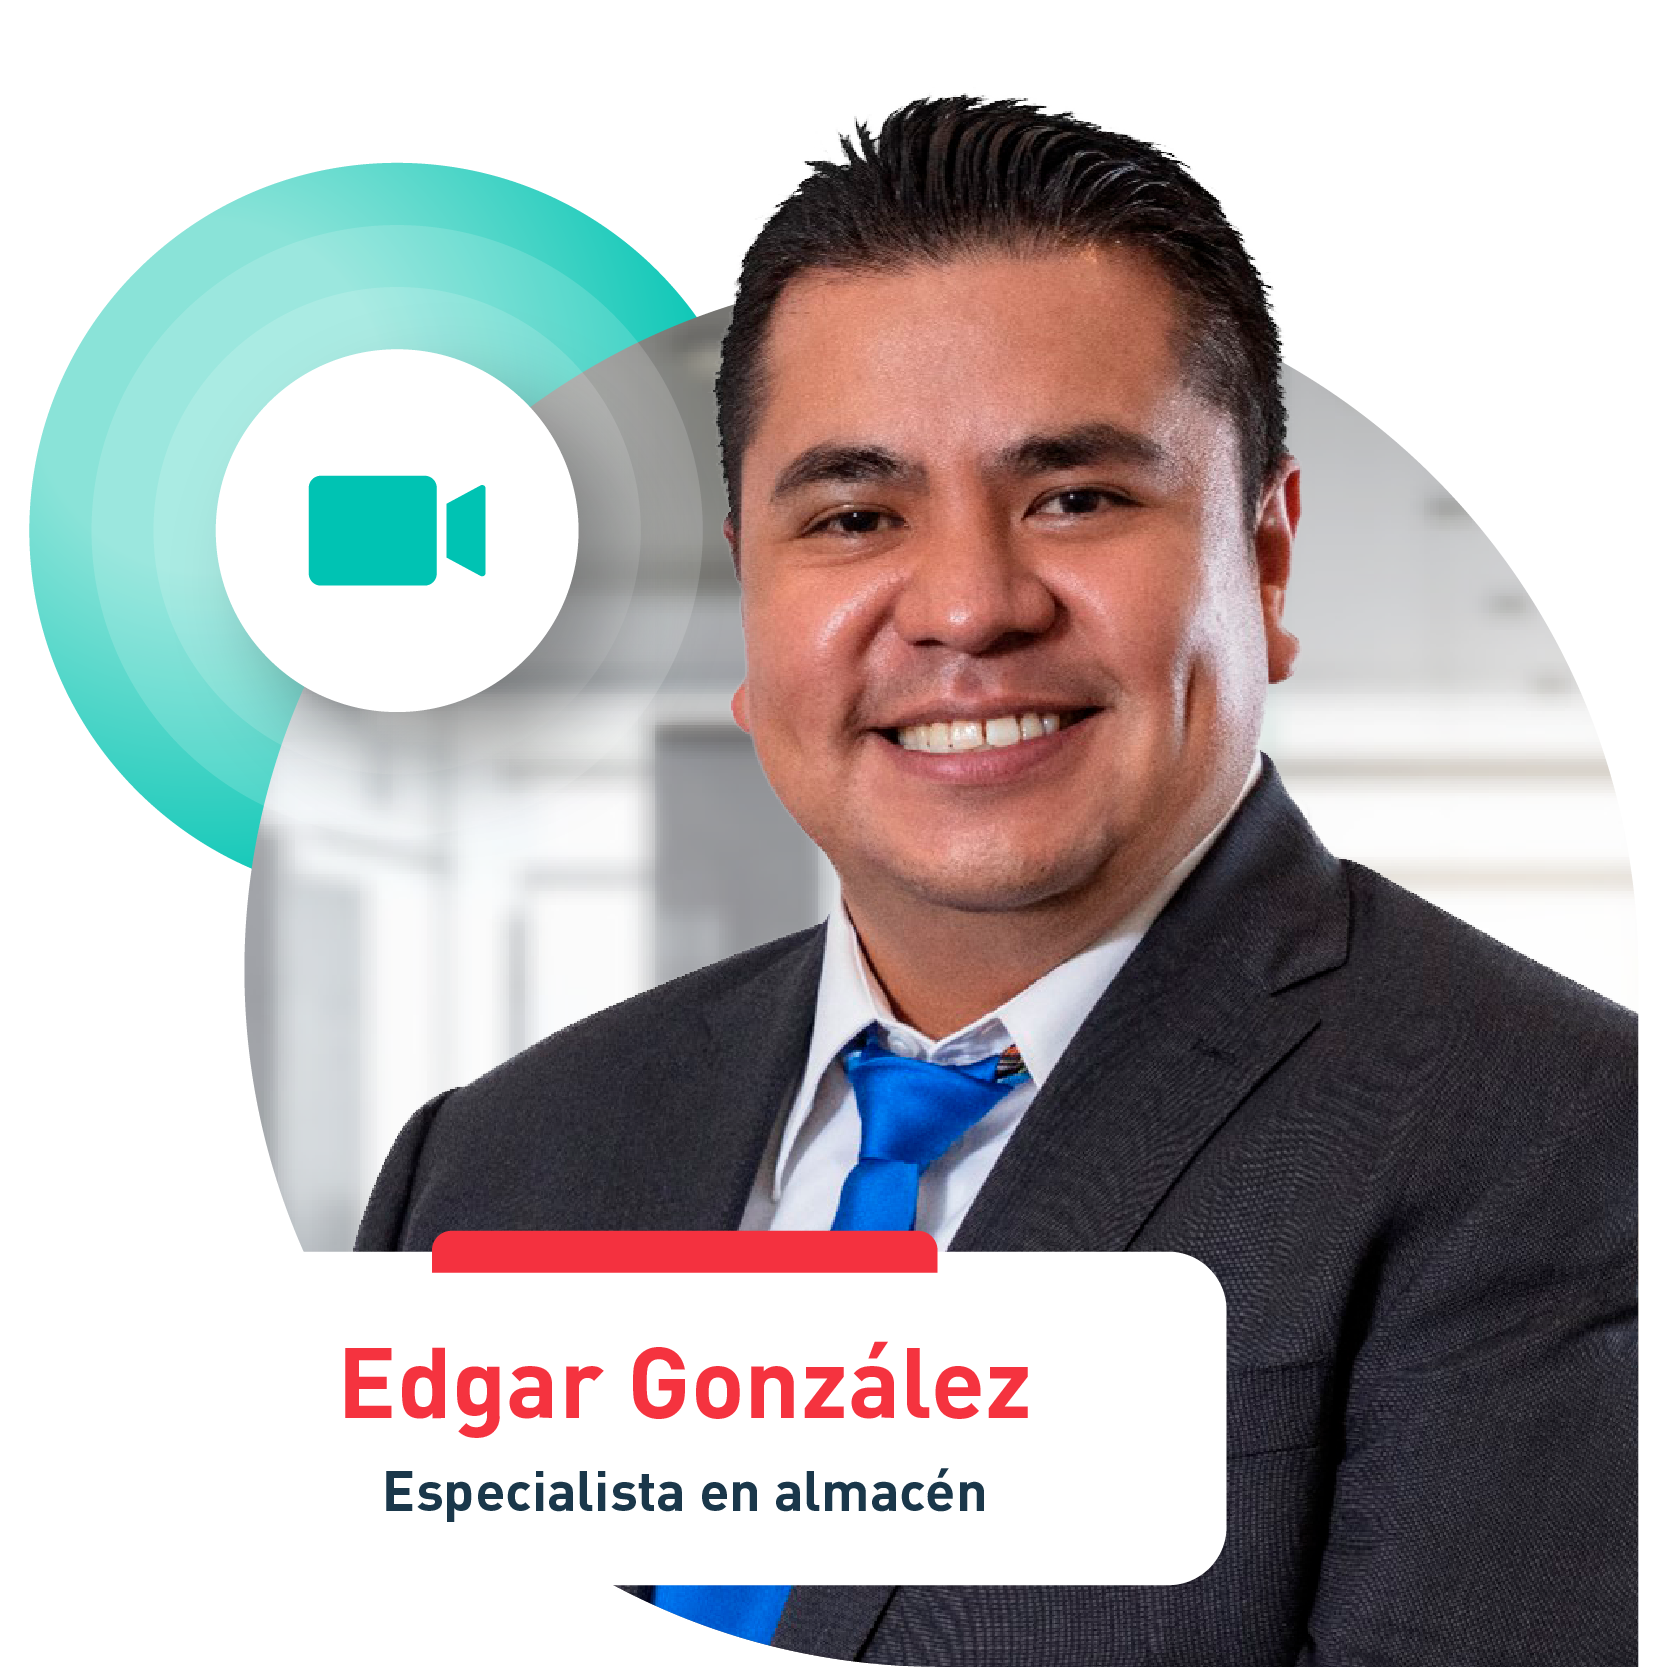 Edgar Gonzalez